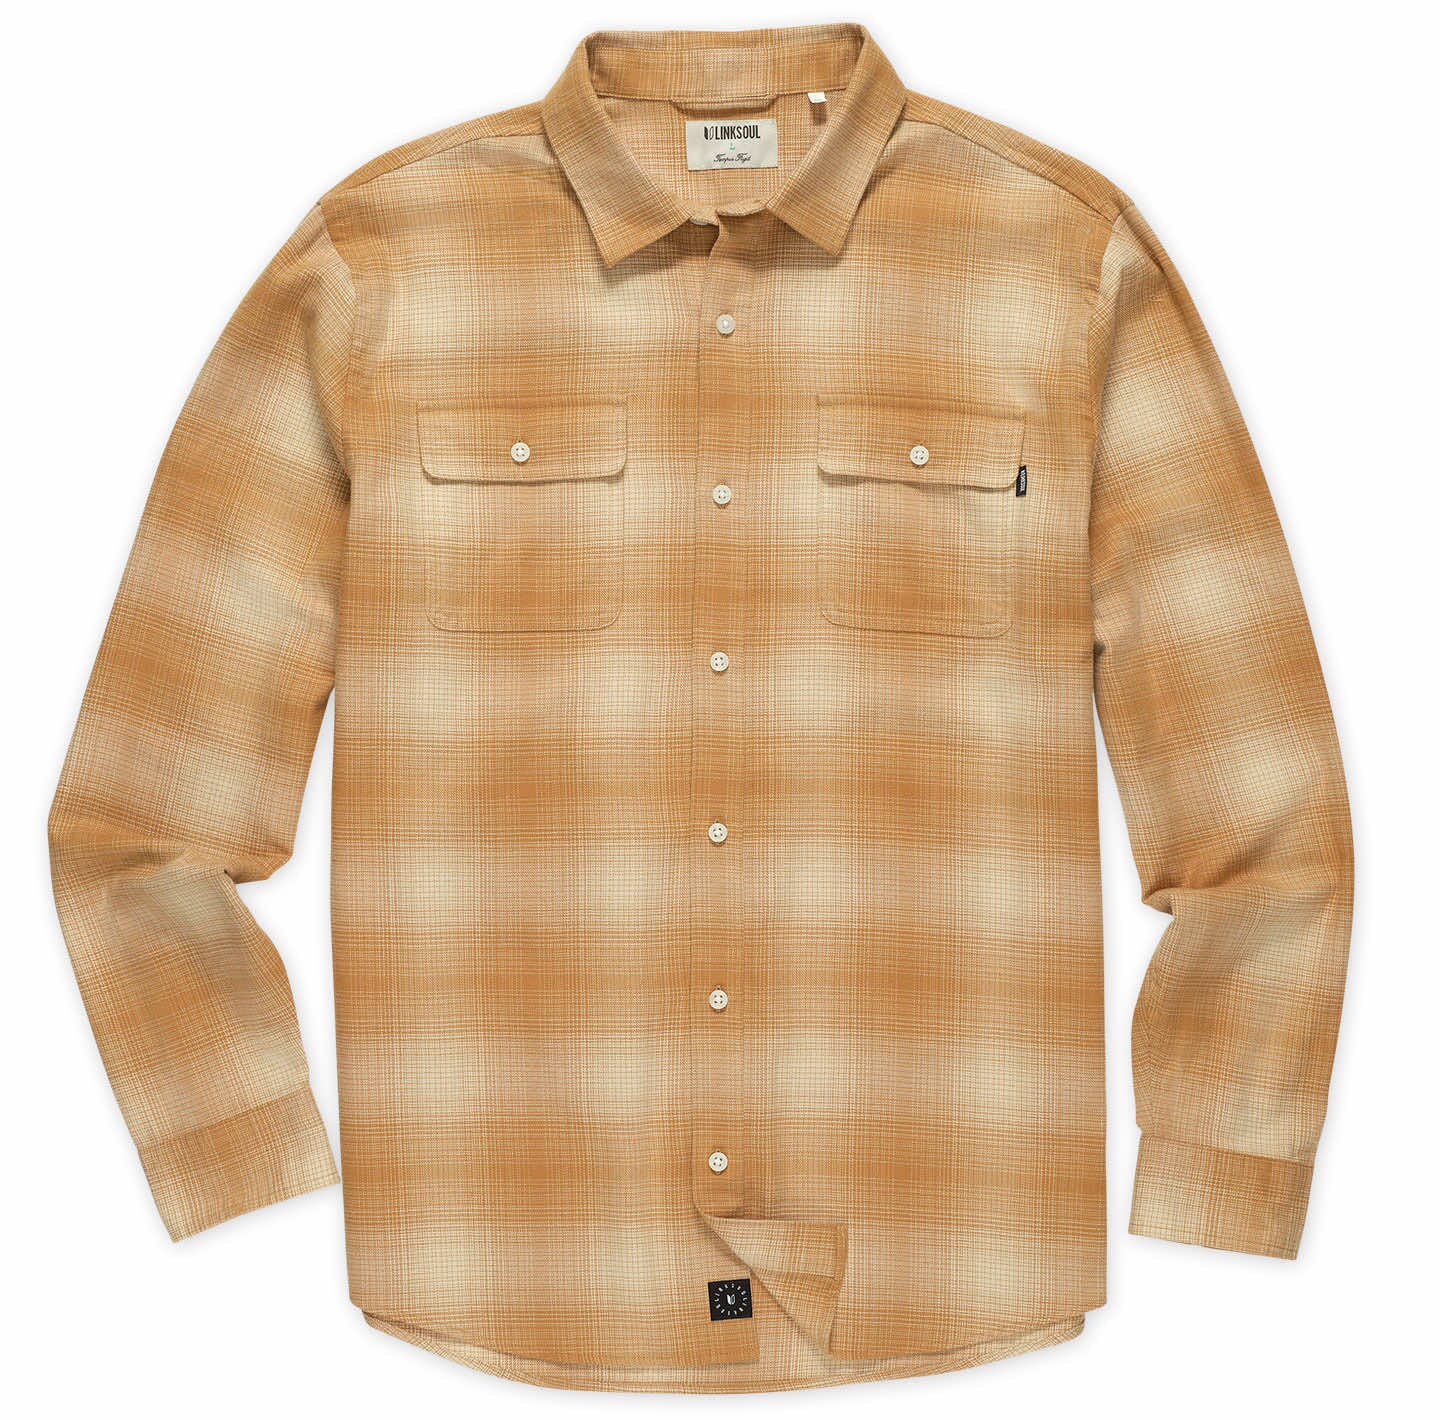 Fairbanks Flannel Shirt - LINKSOUL